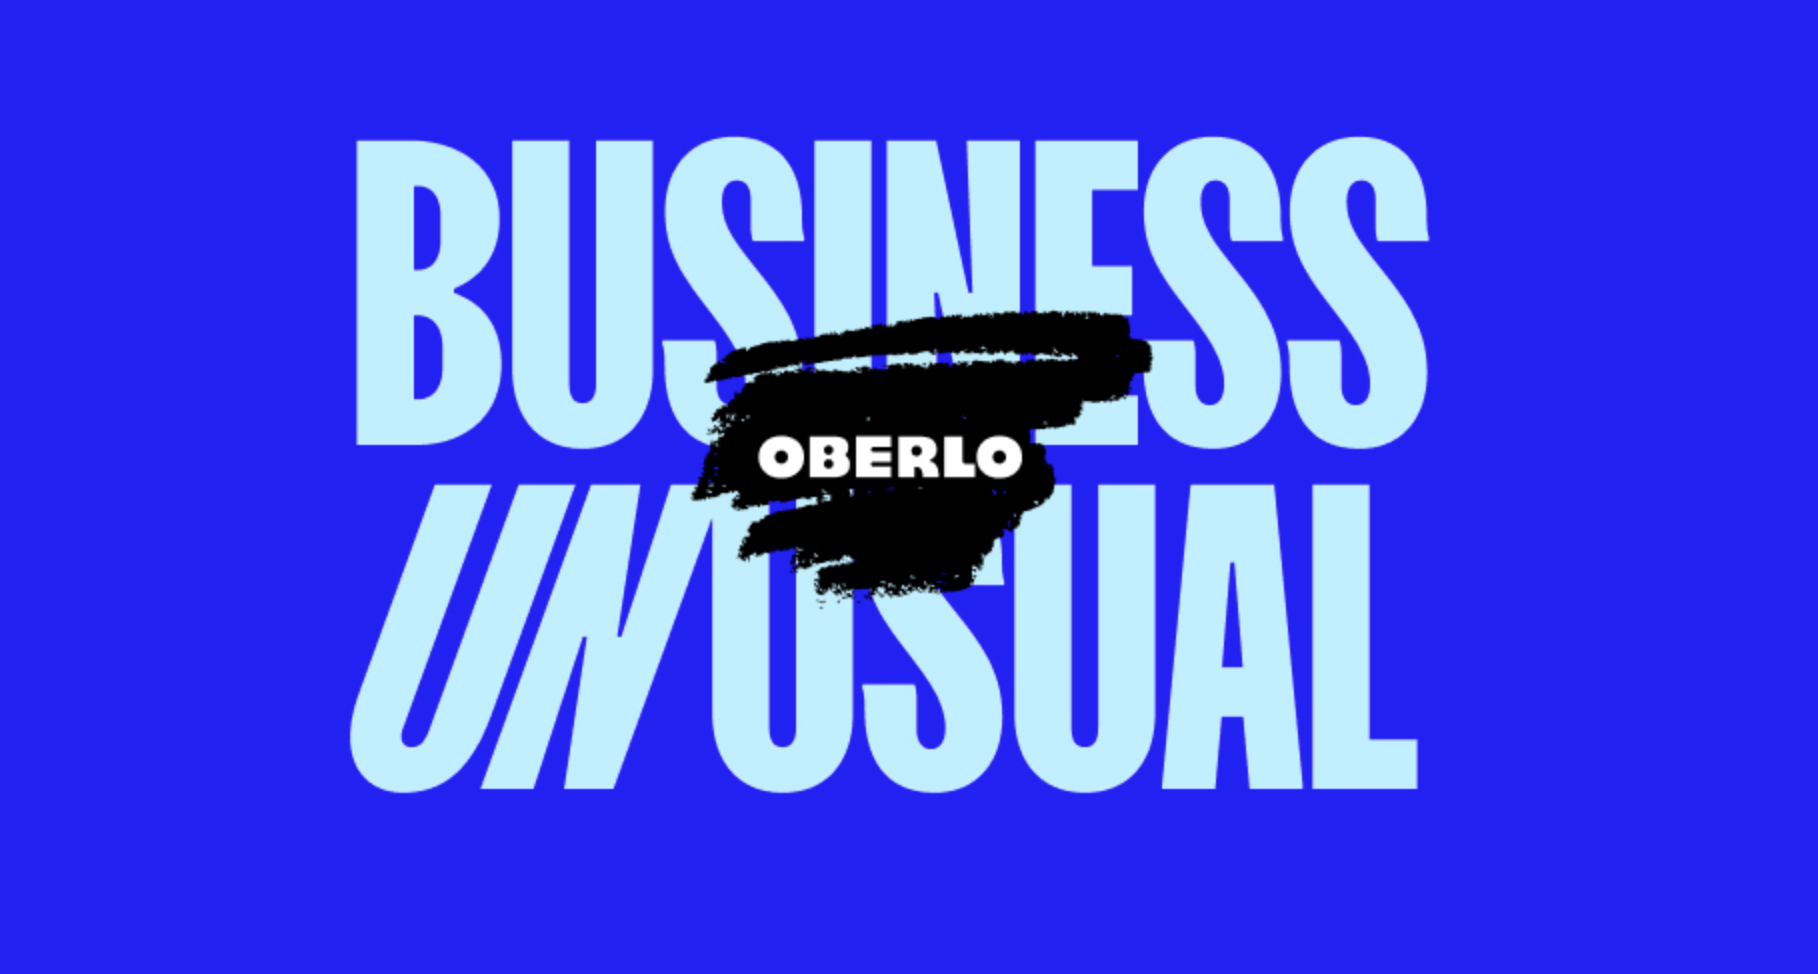 Oberlo Facebook cover image